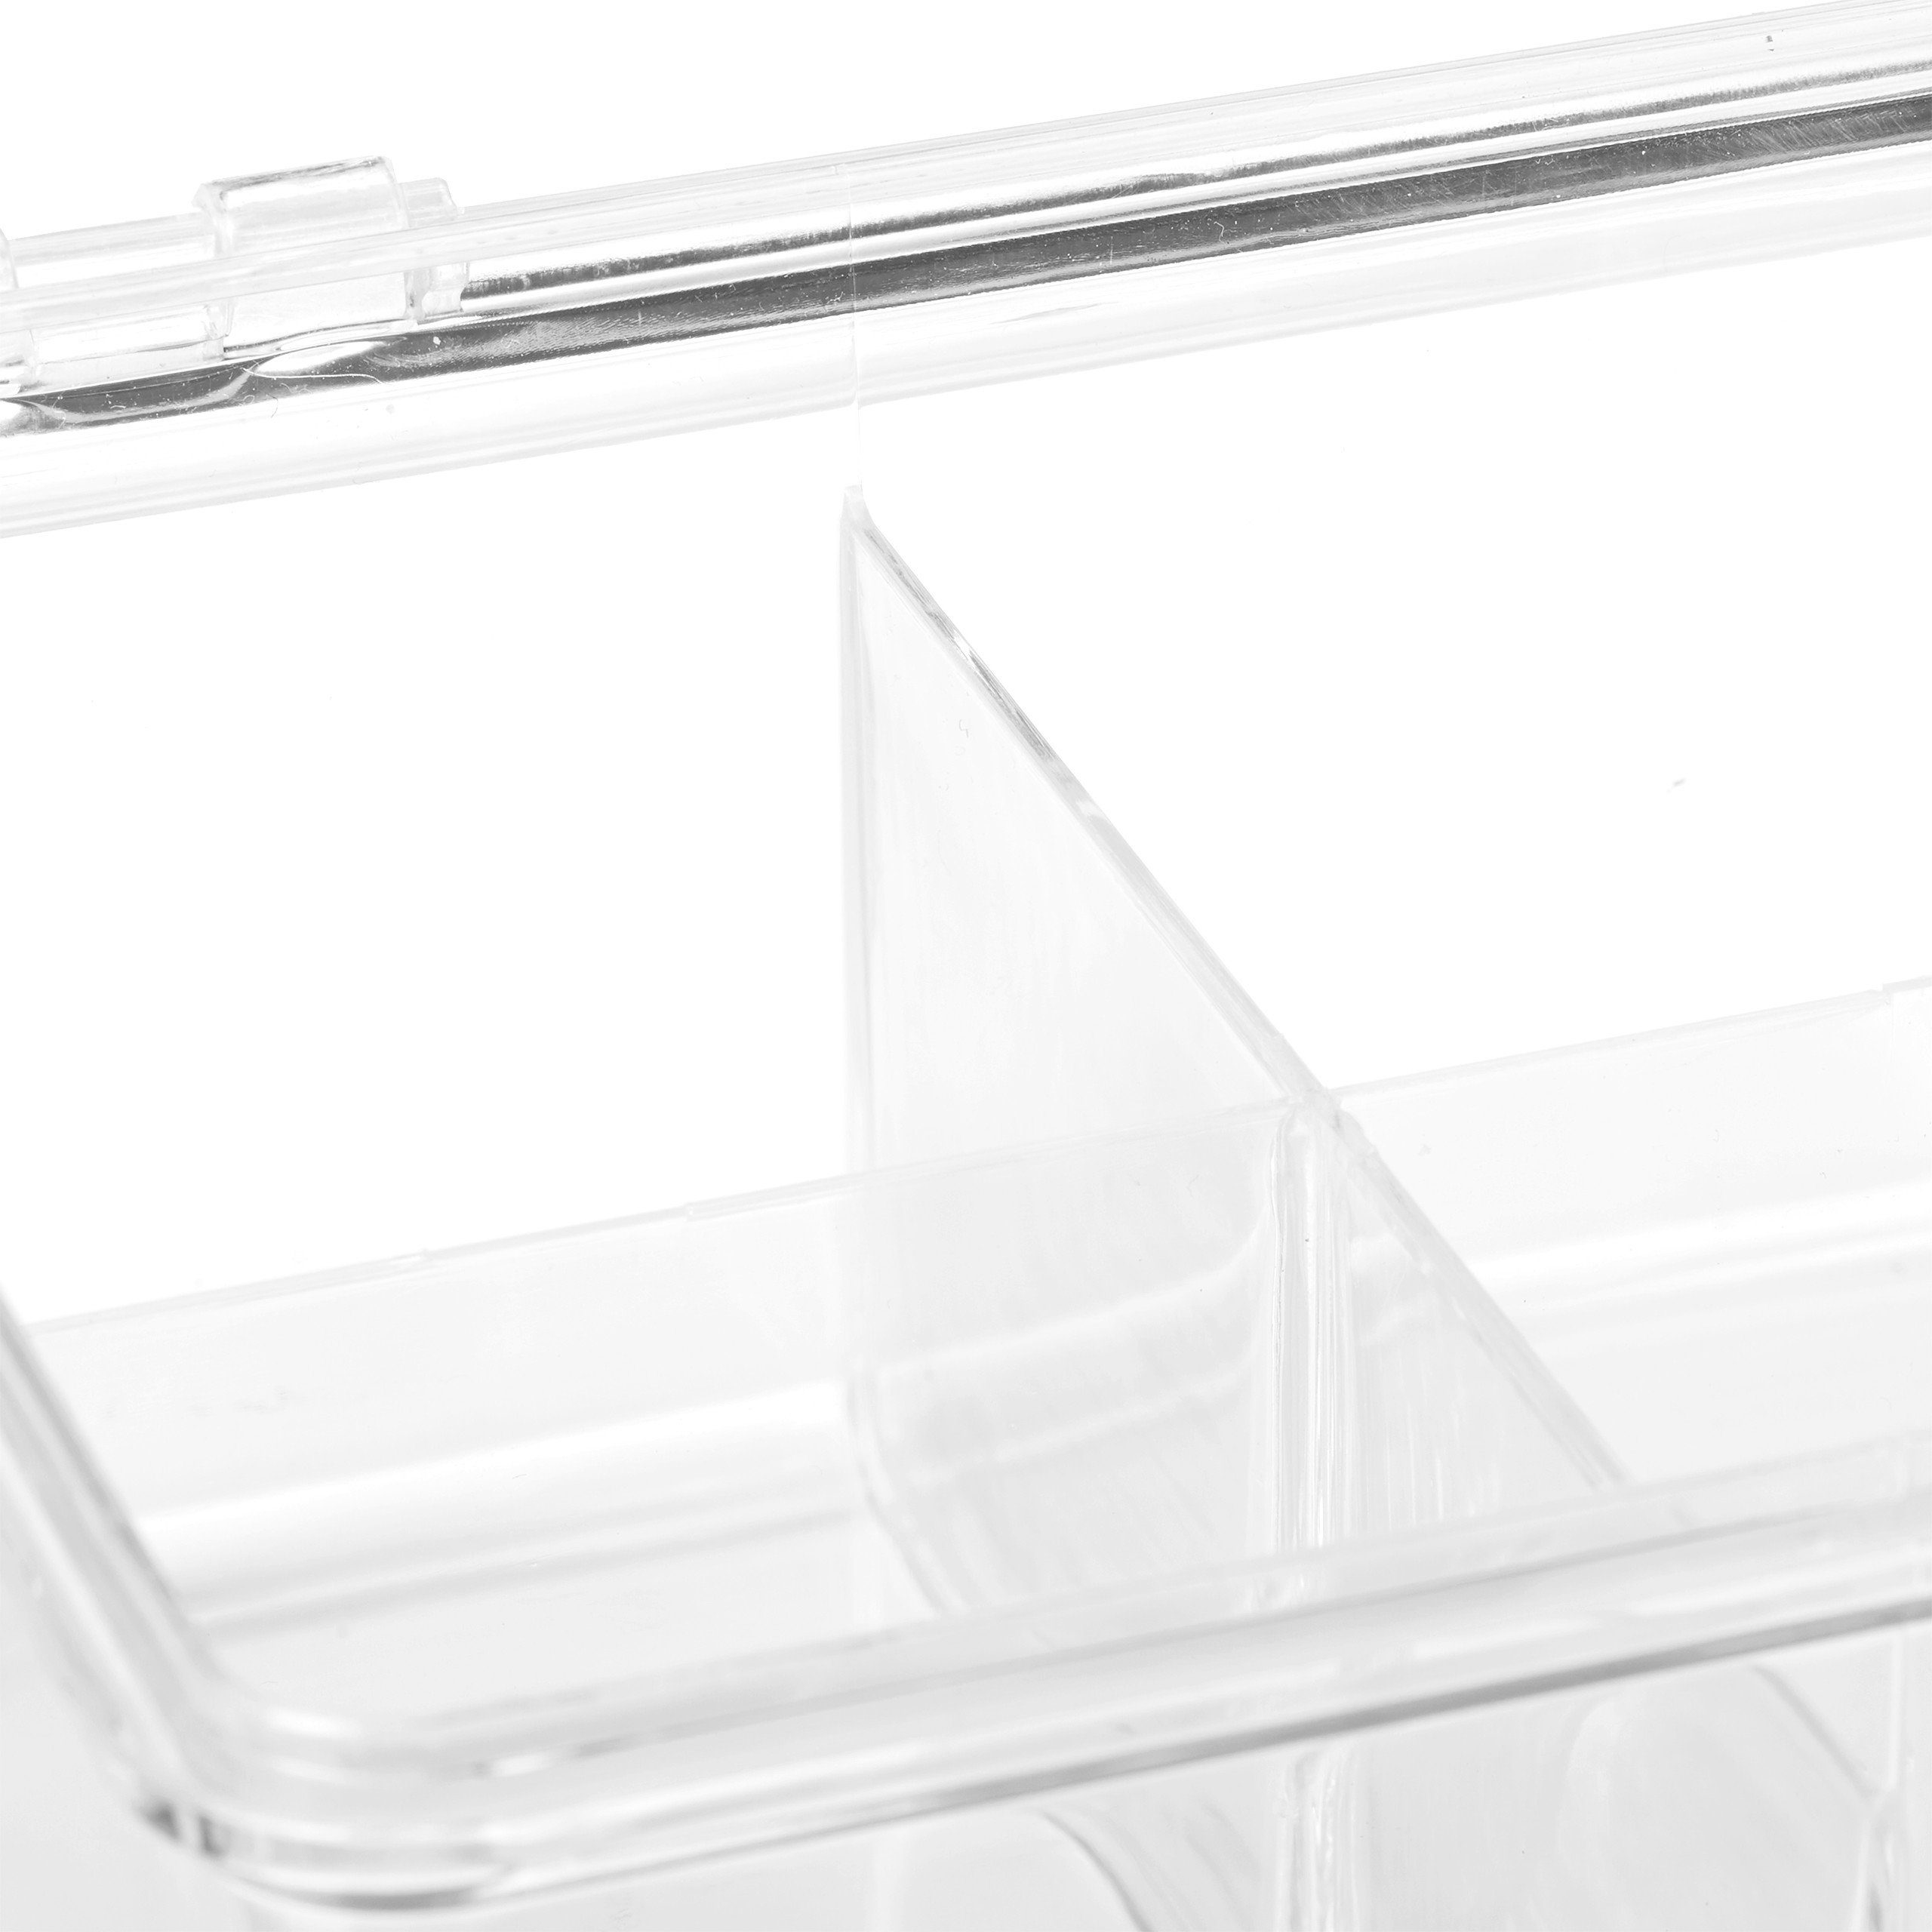 Teebox relaxdays mit Teebox Kunststoff 6 Fächern, transparent